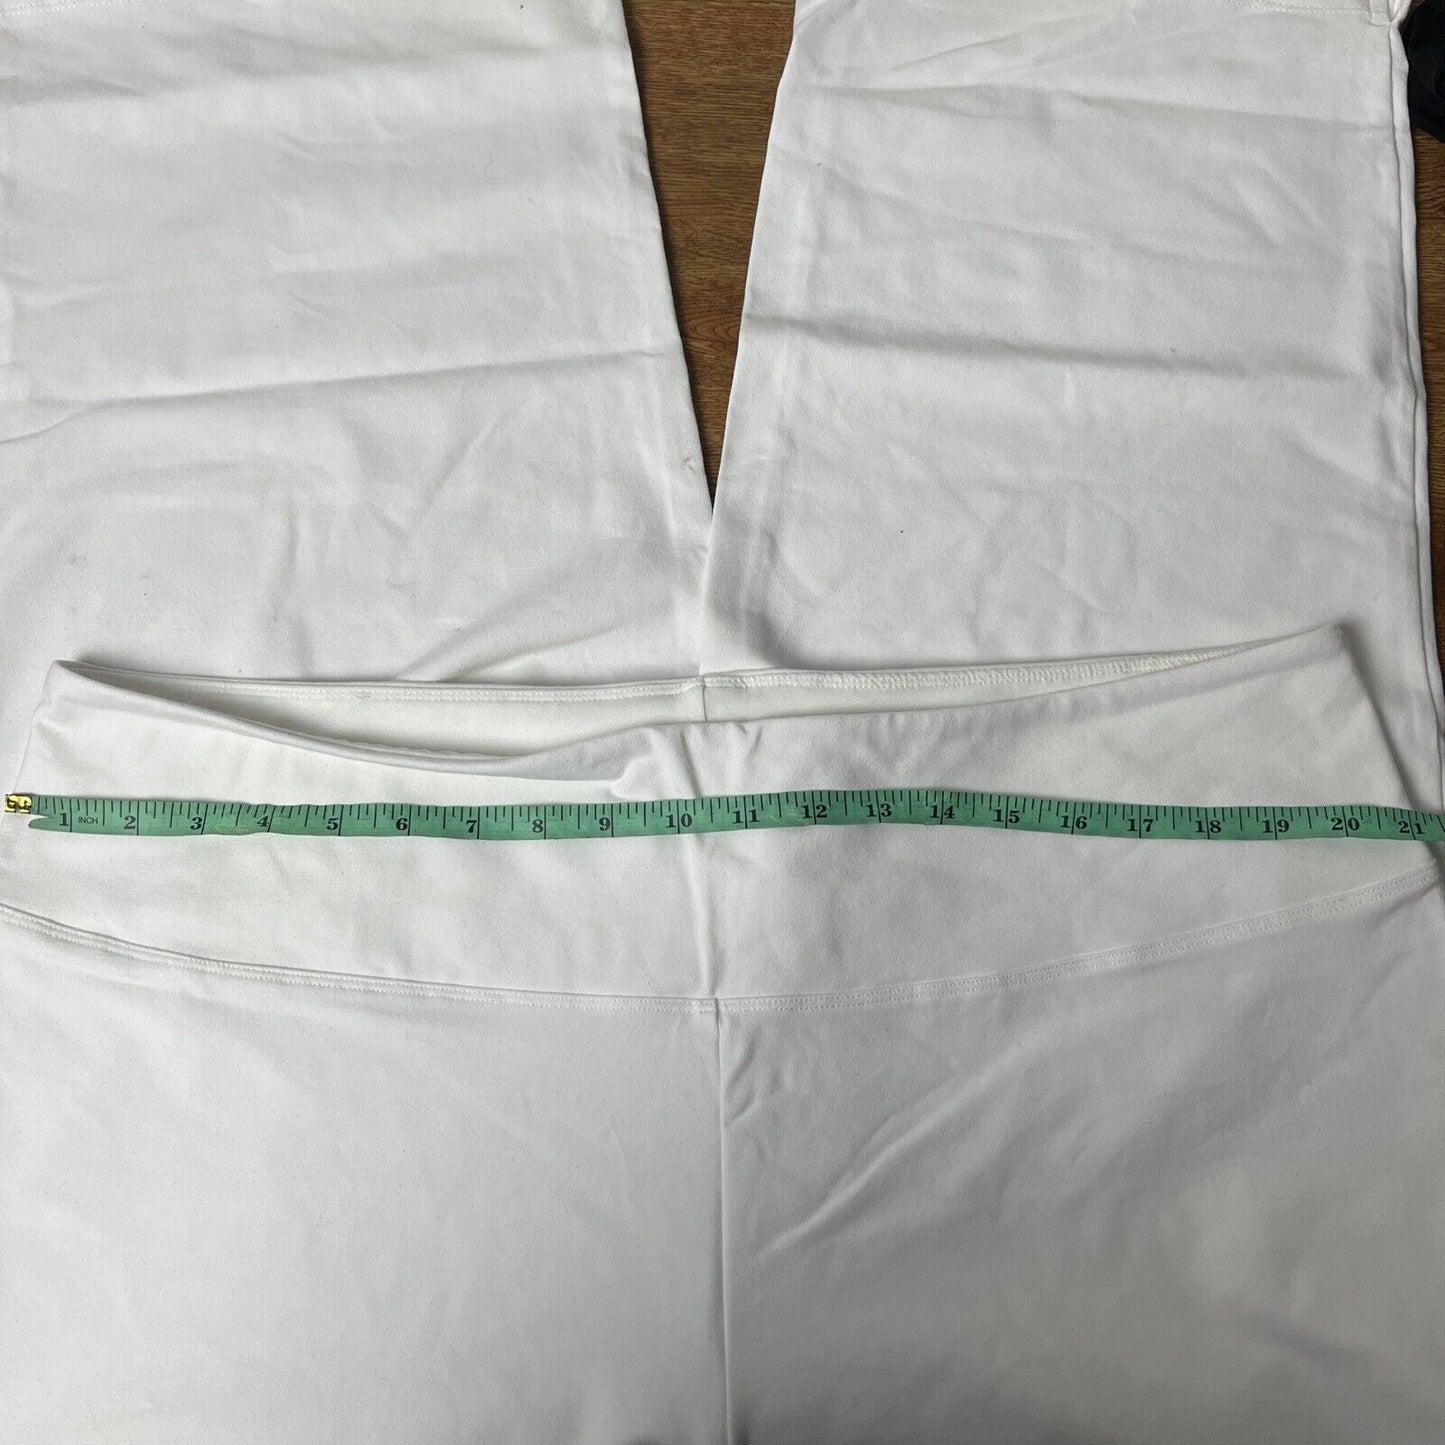 Women with Control Tummy Control Full Leg Crop Pants (White, 2XT) A513650